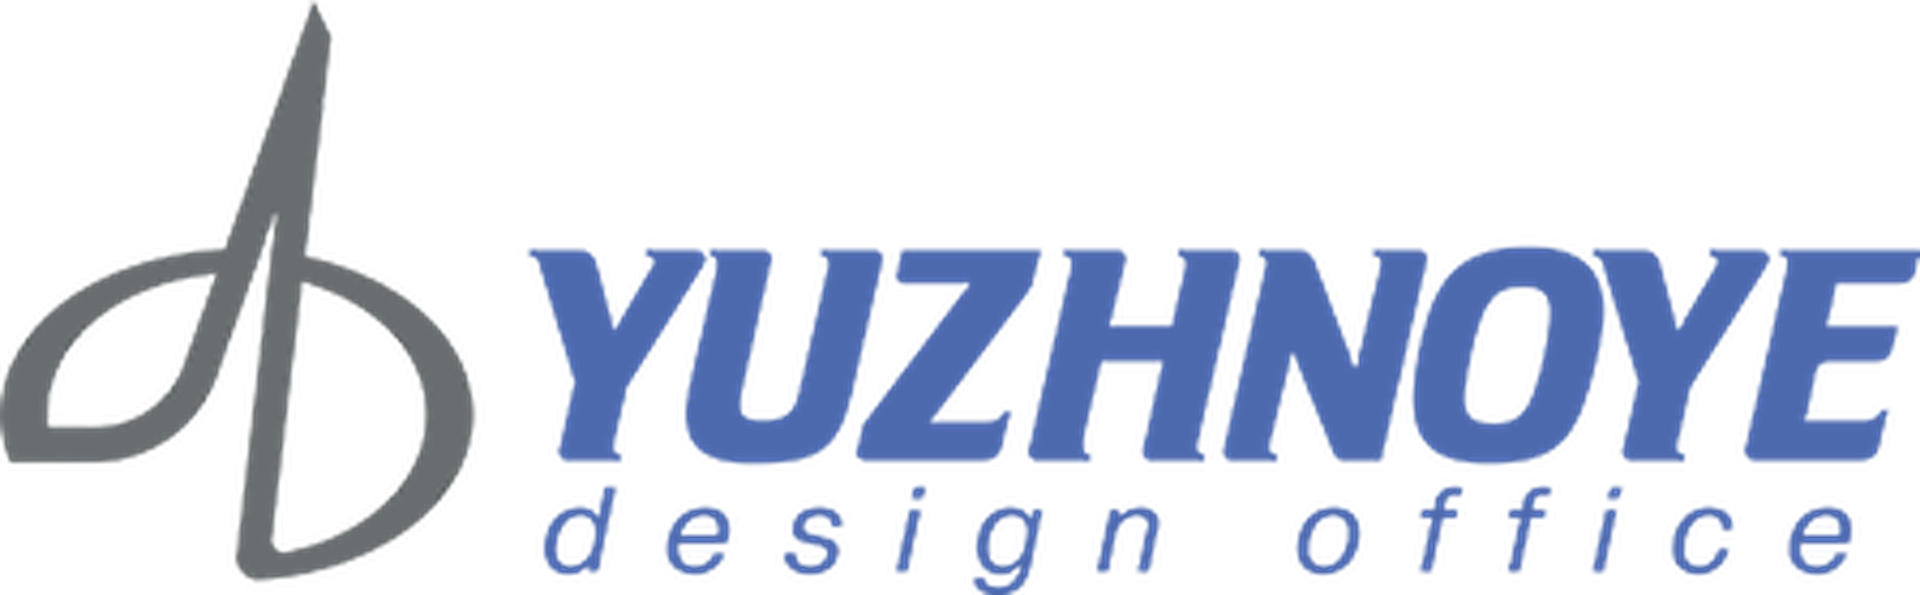 Yuzhnoye Design Bureau's logo